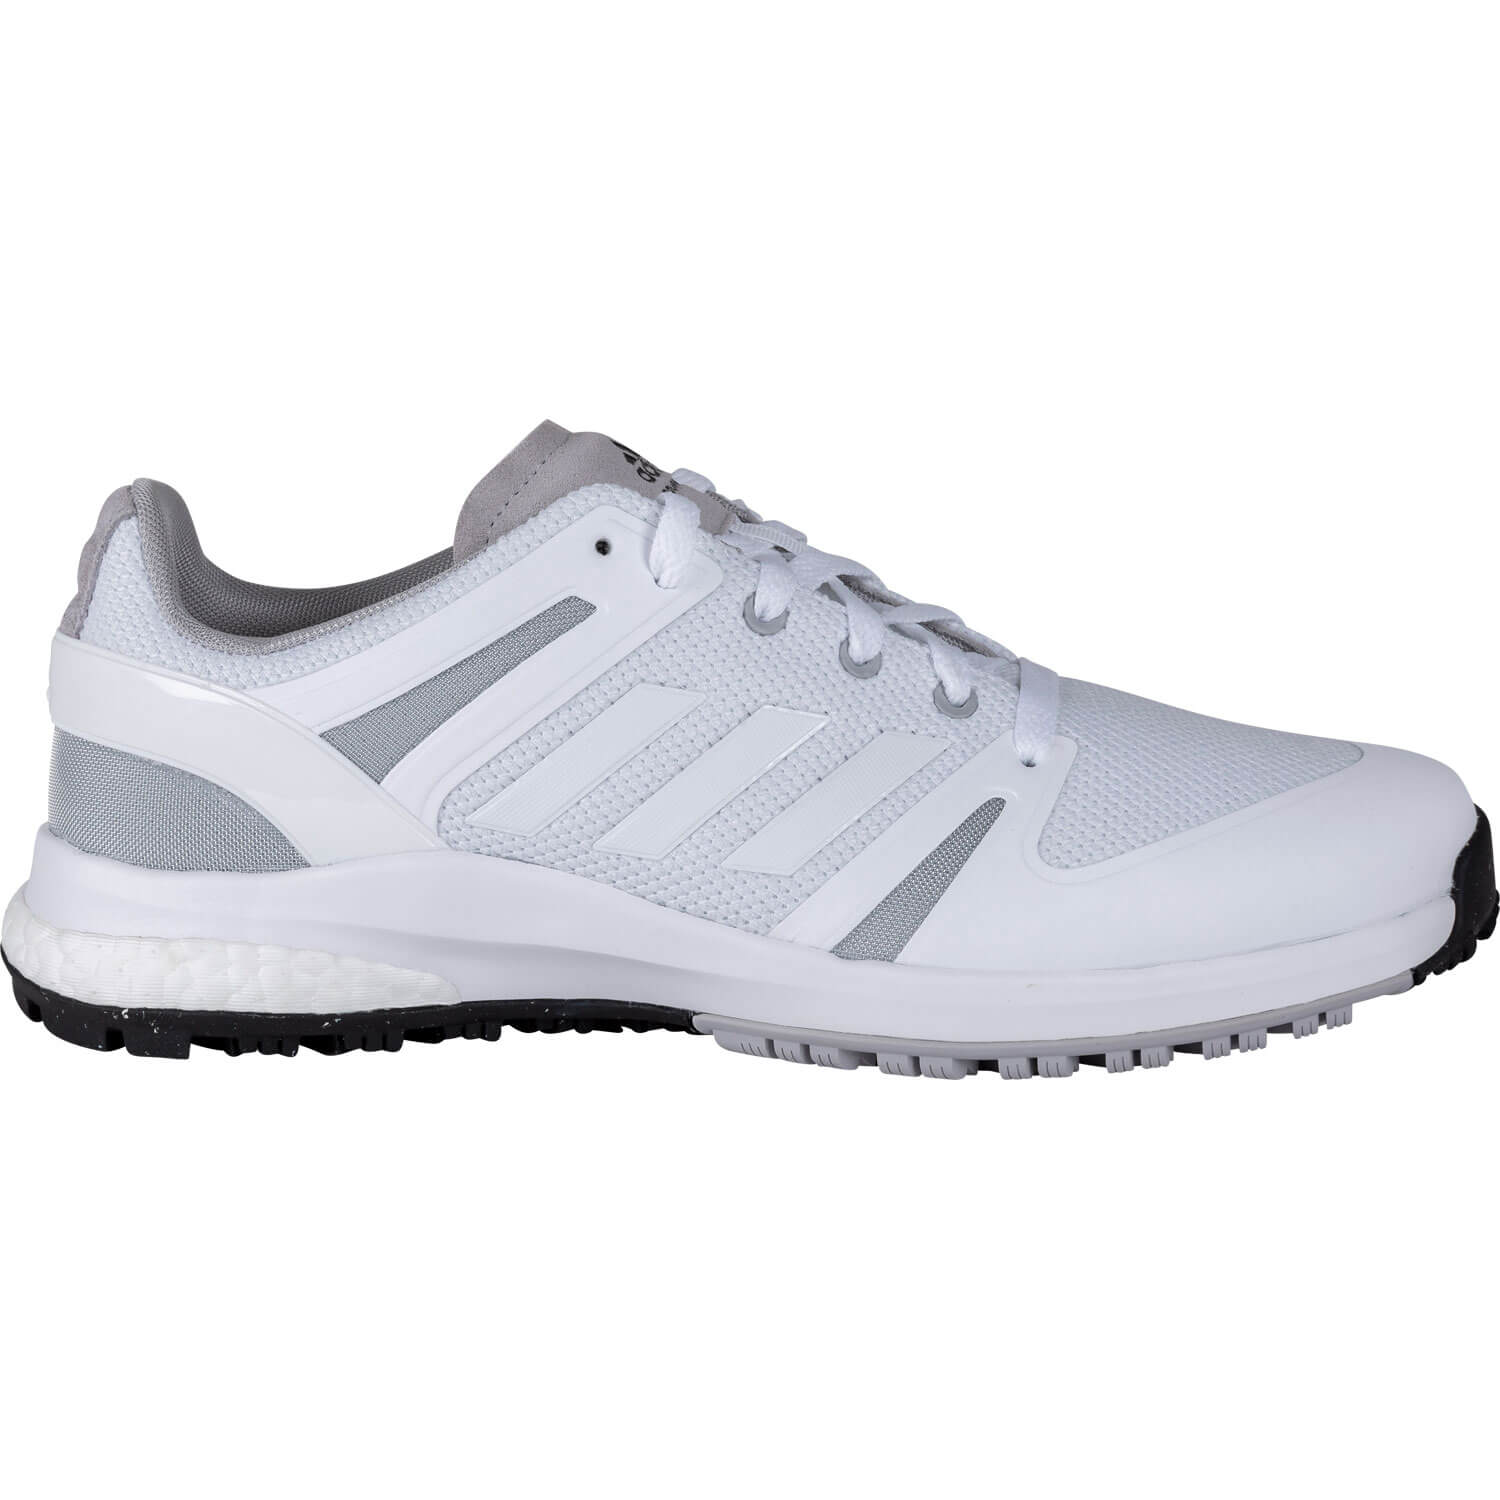 Adidas EQT SL White/Grey Herren